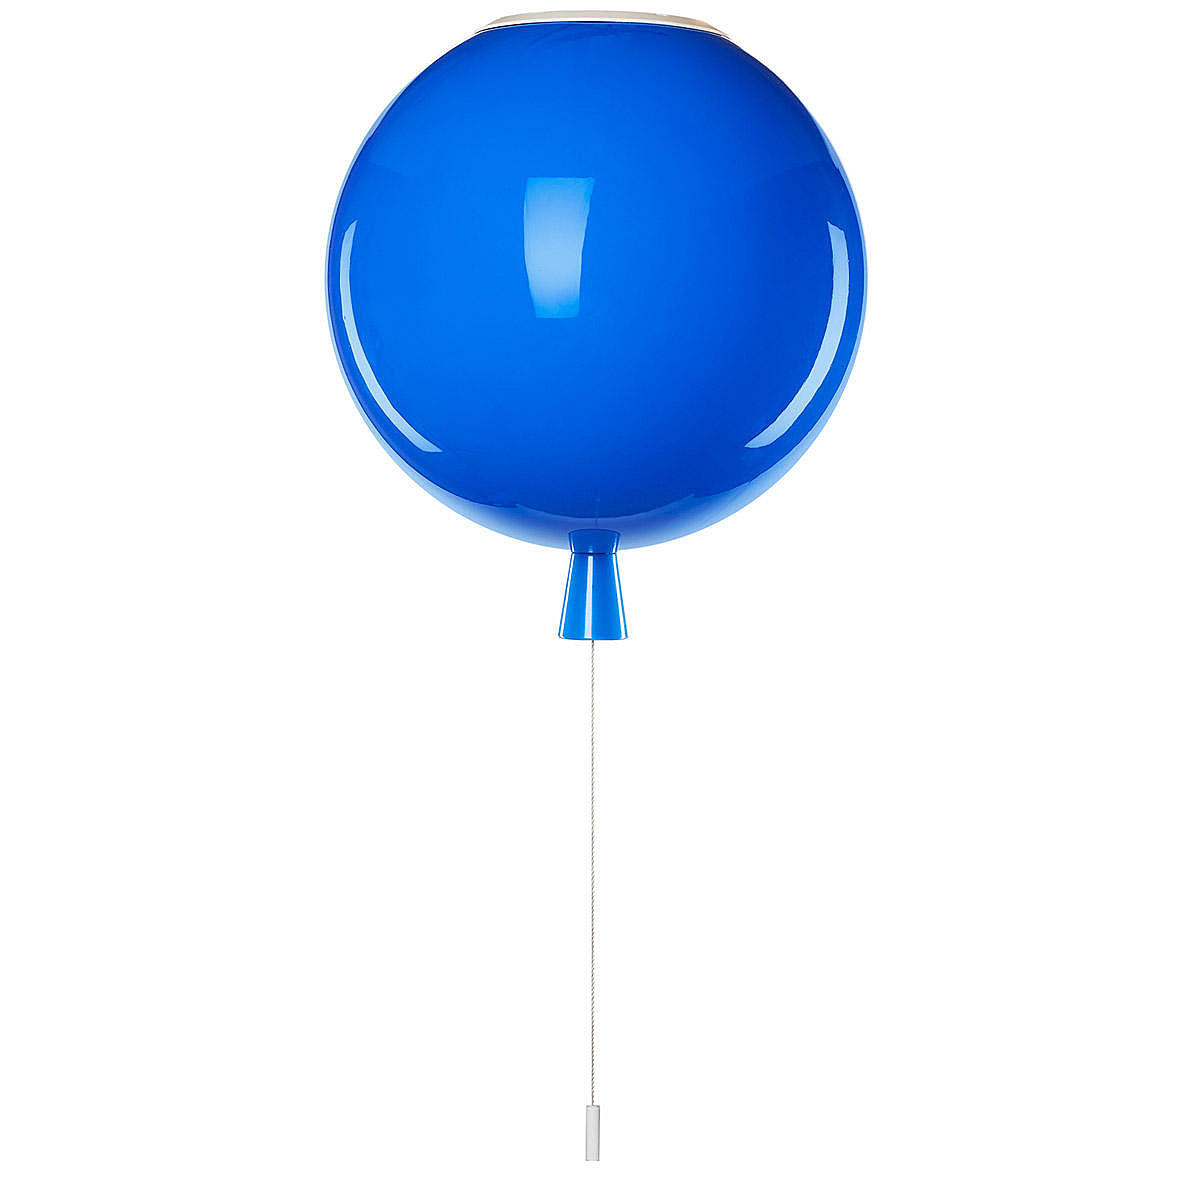     Balloon 5055C/M blue Loft It